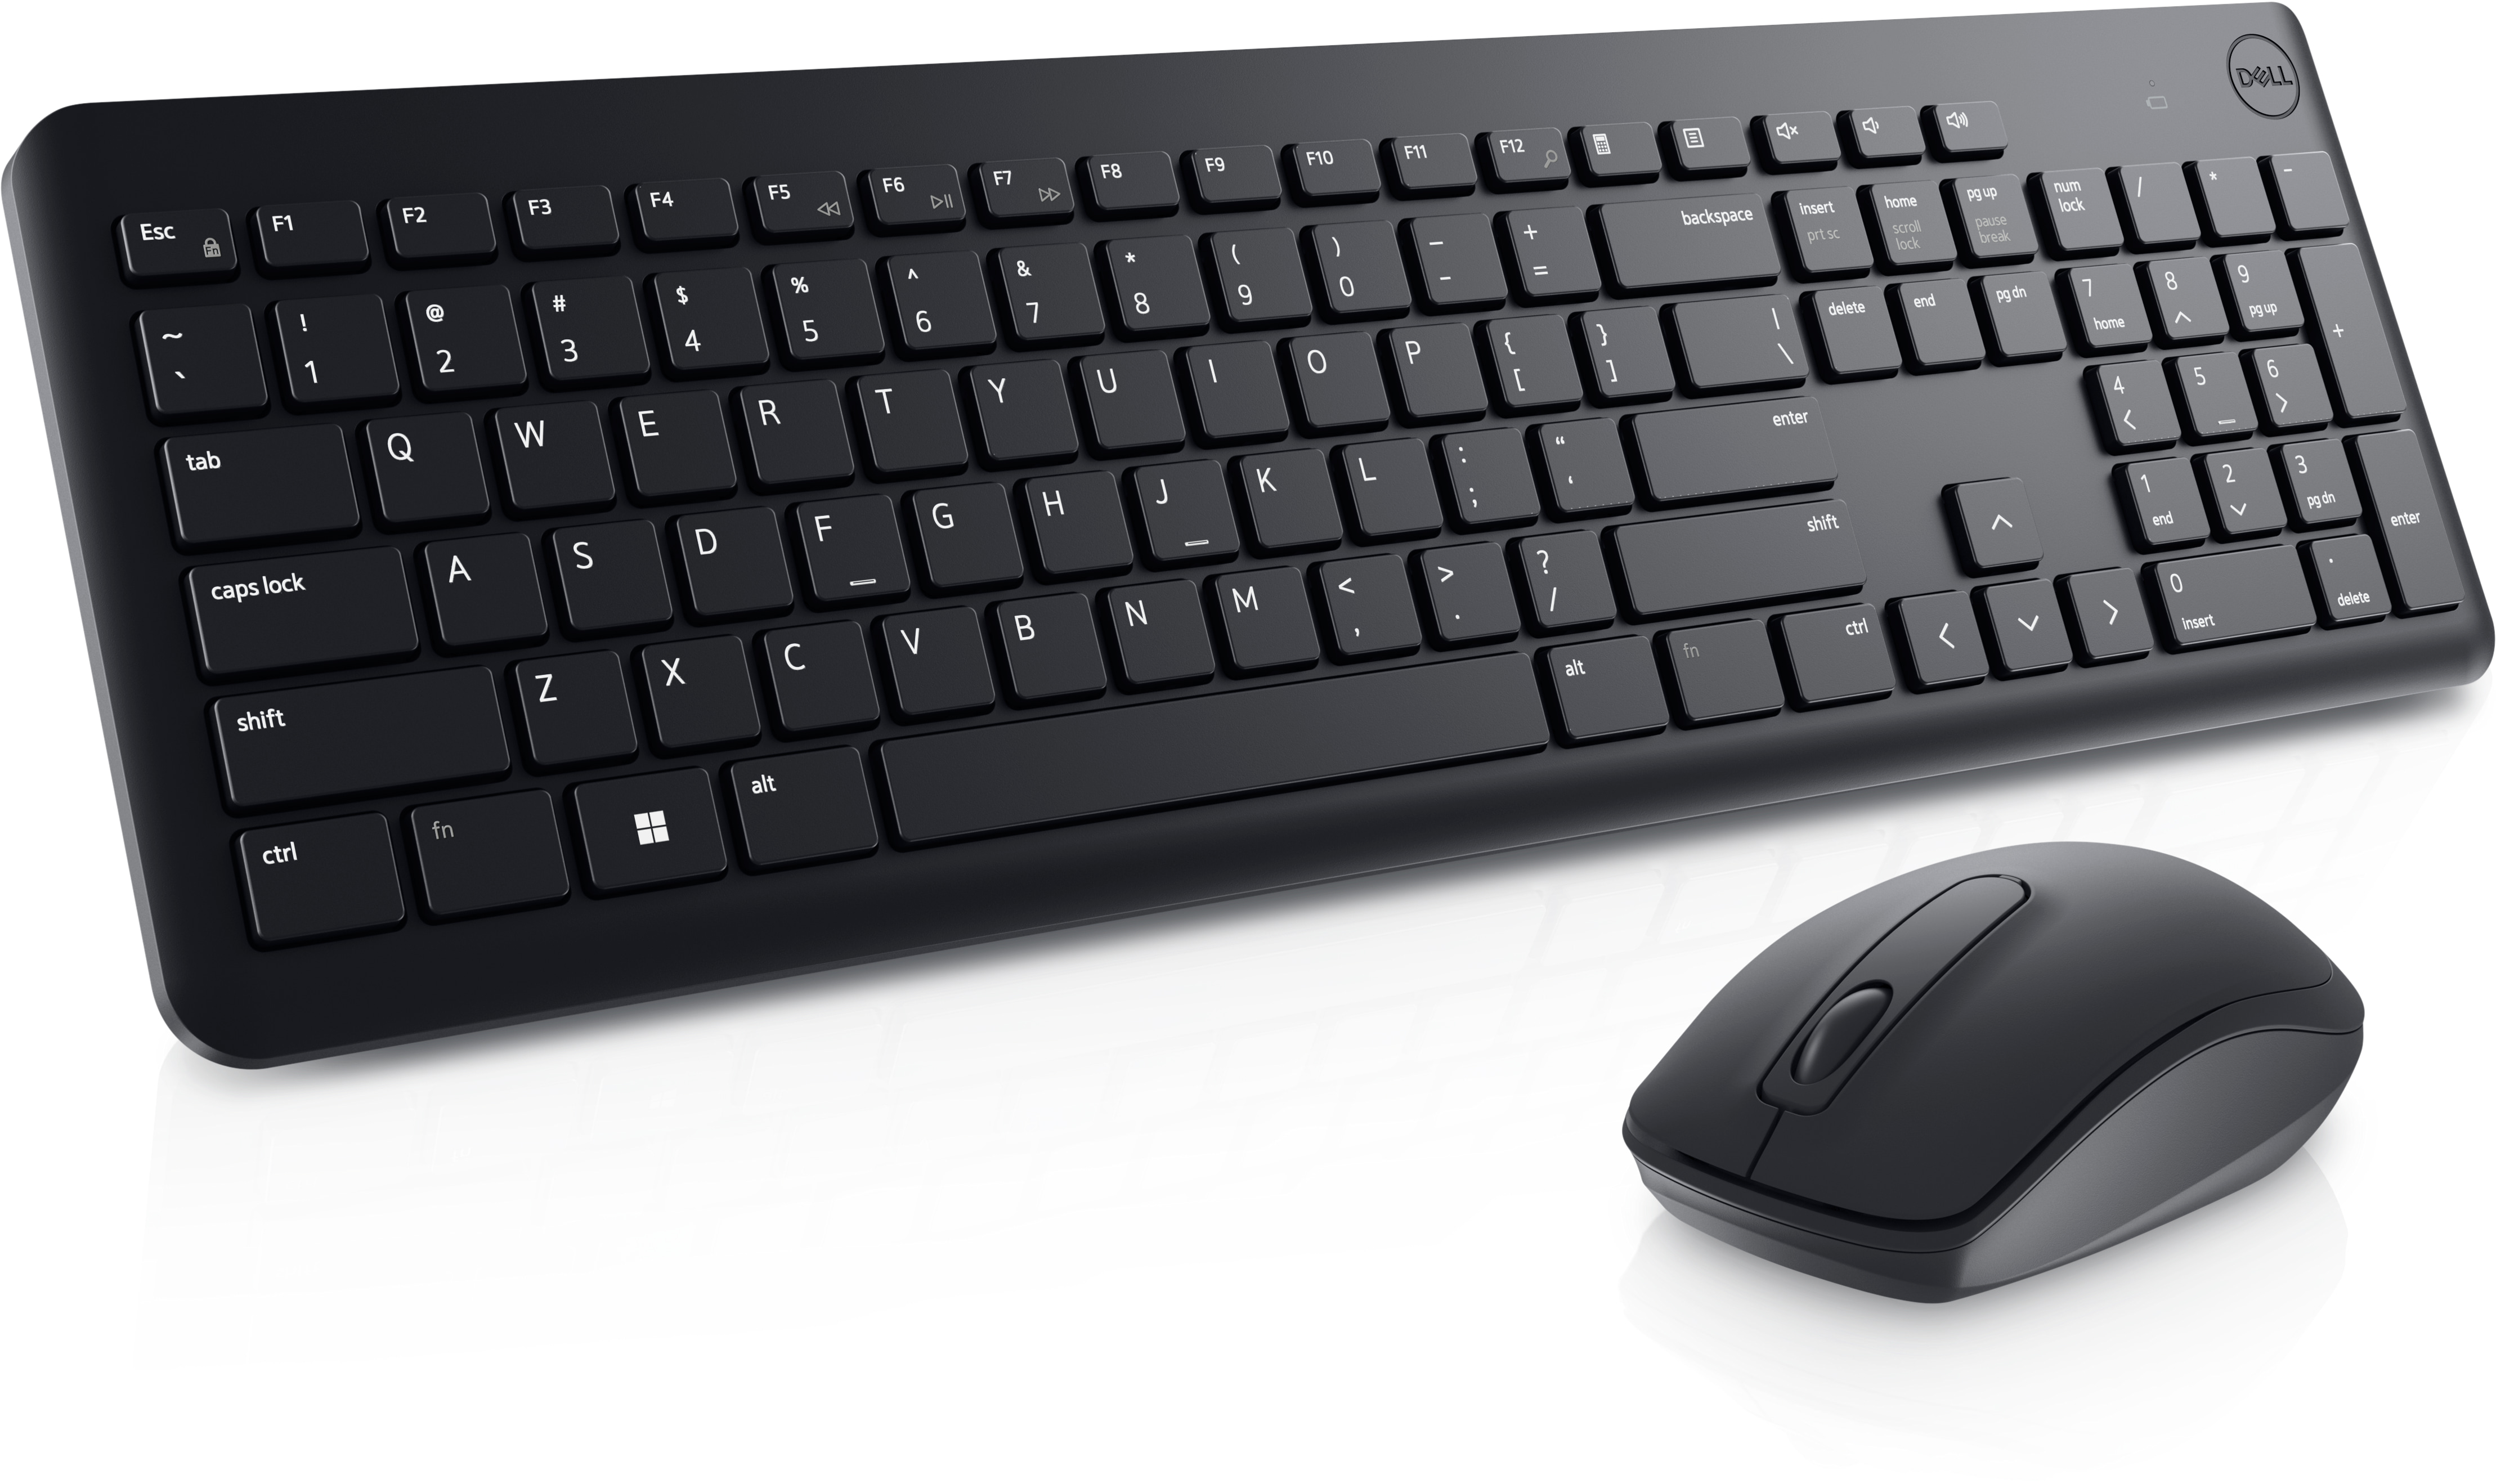 Structureel plak Terug kijken Dell Wireless Keyboard and Mouse (KM3322W) : Computer Accessories | Dell USA